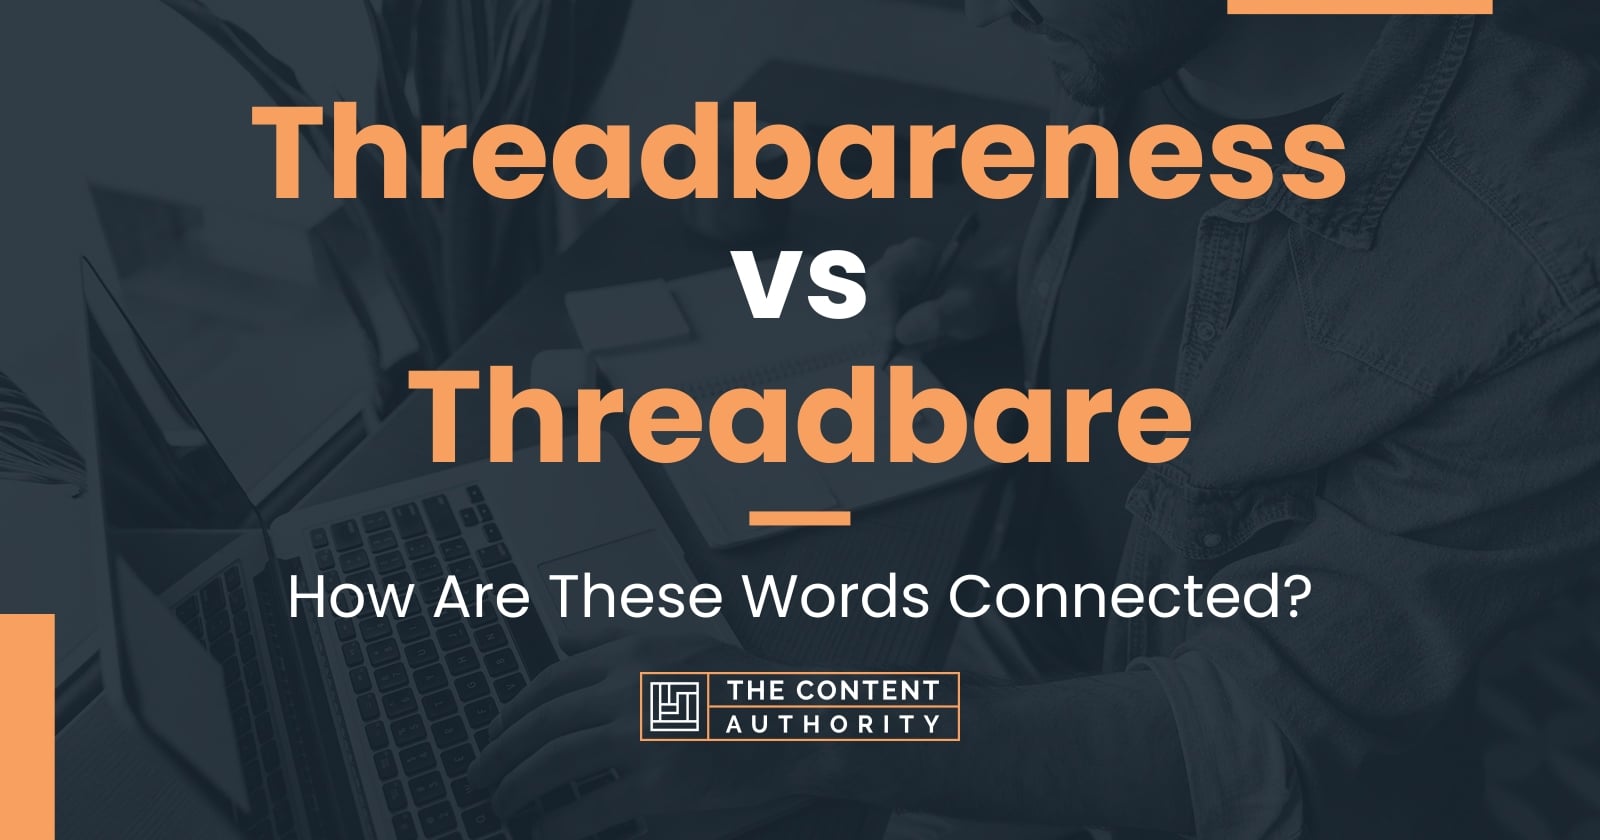 Threadbareness vs Threadbare: How Are These Words Connected?